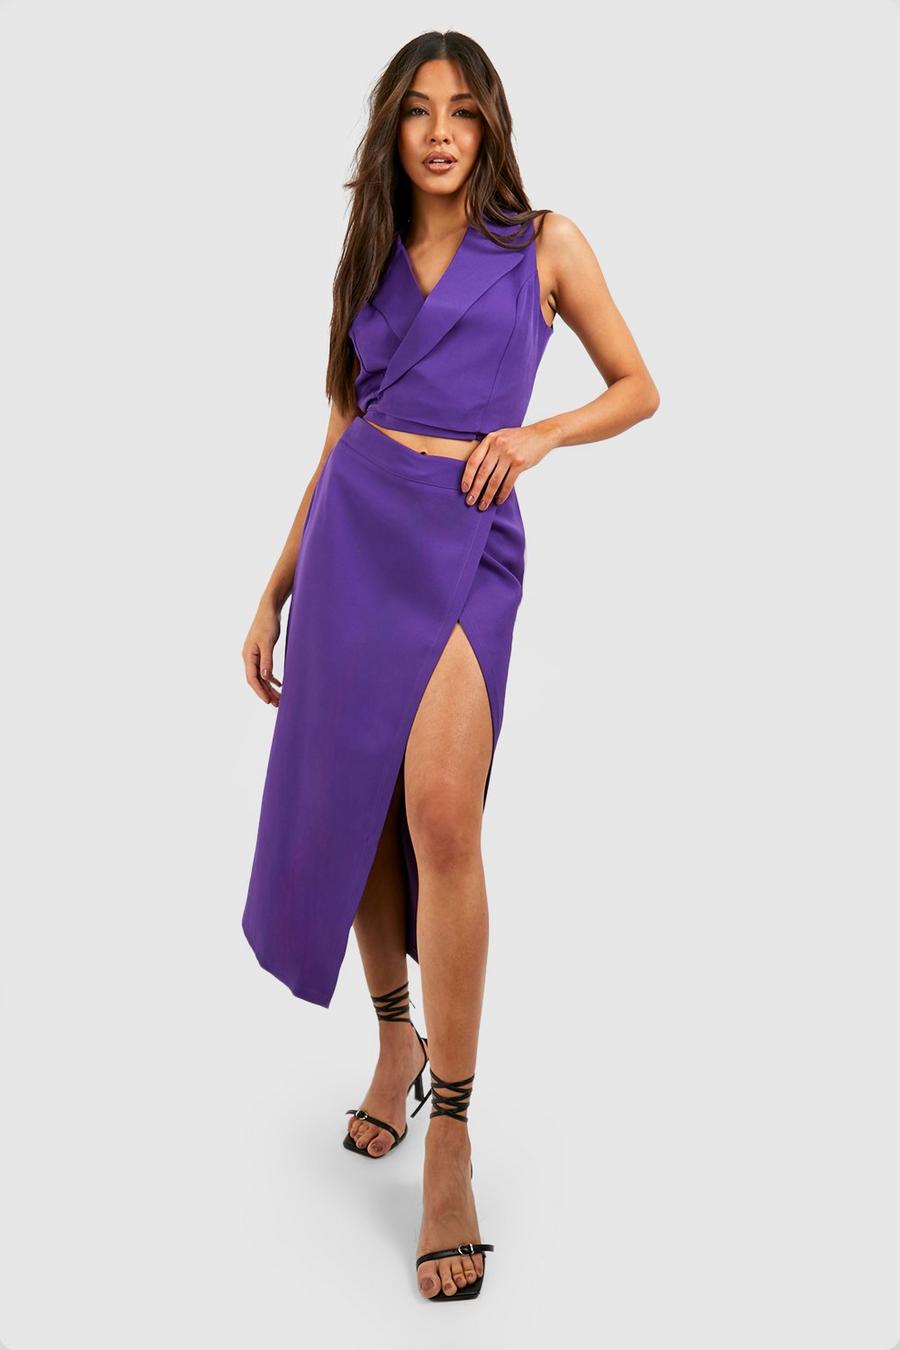 Jewel purple Thigh Split Wrap Front Tailored Maxi Skirt